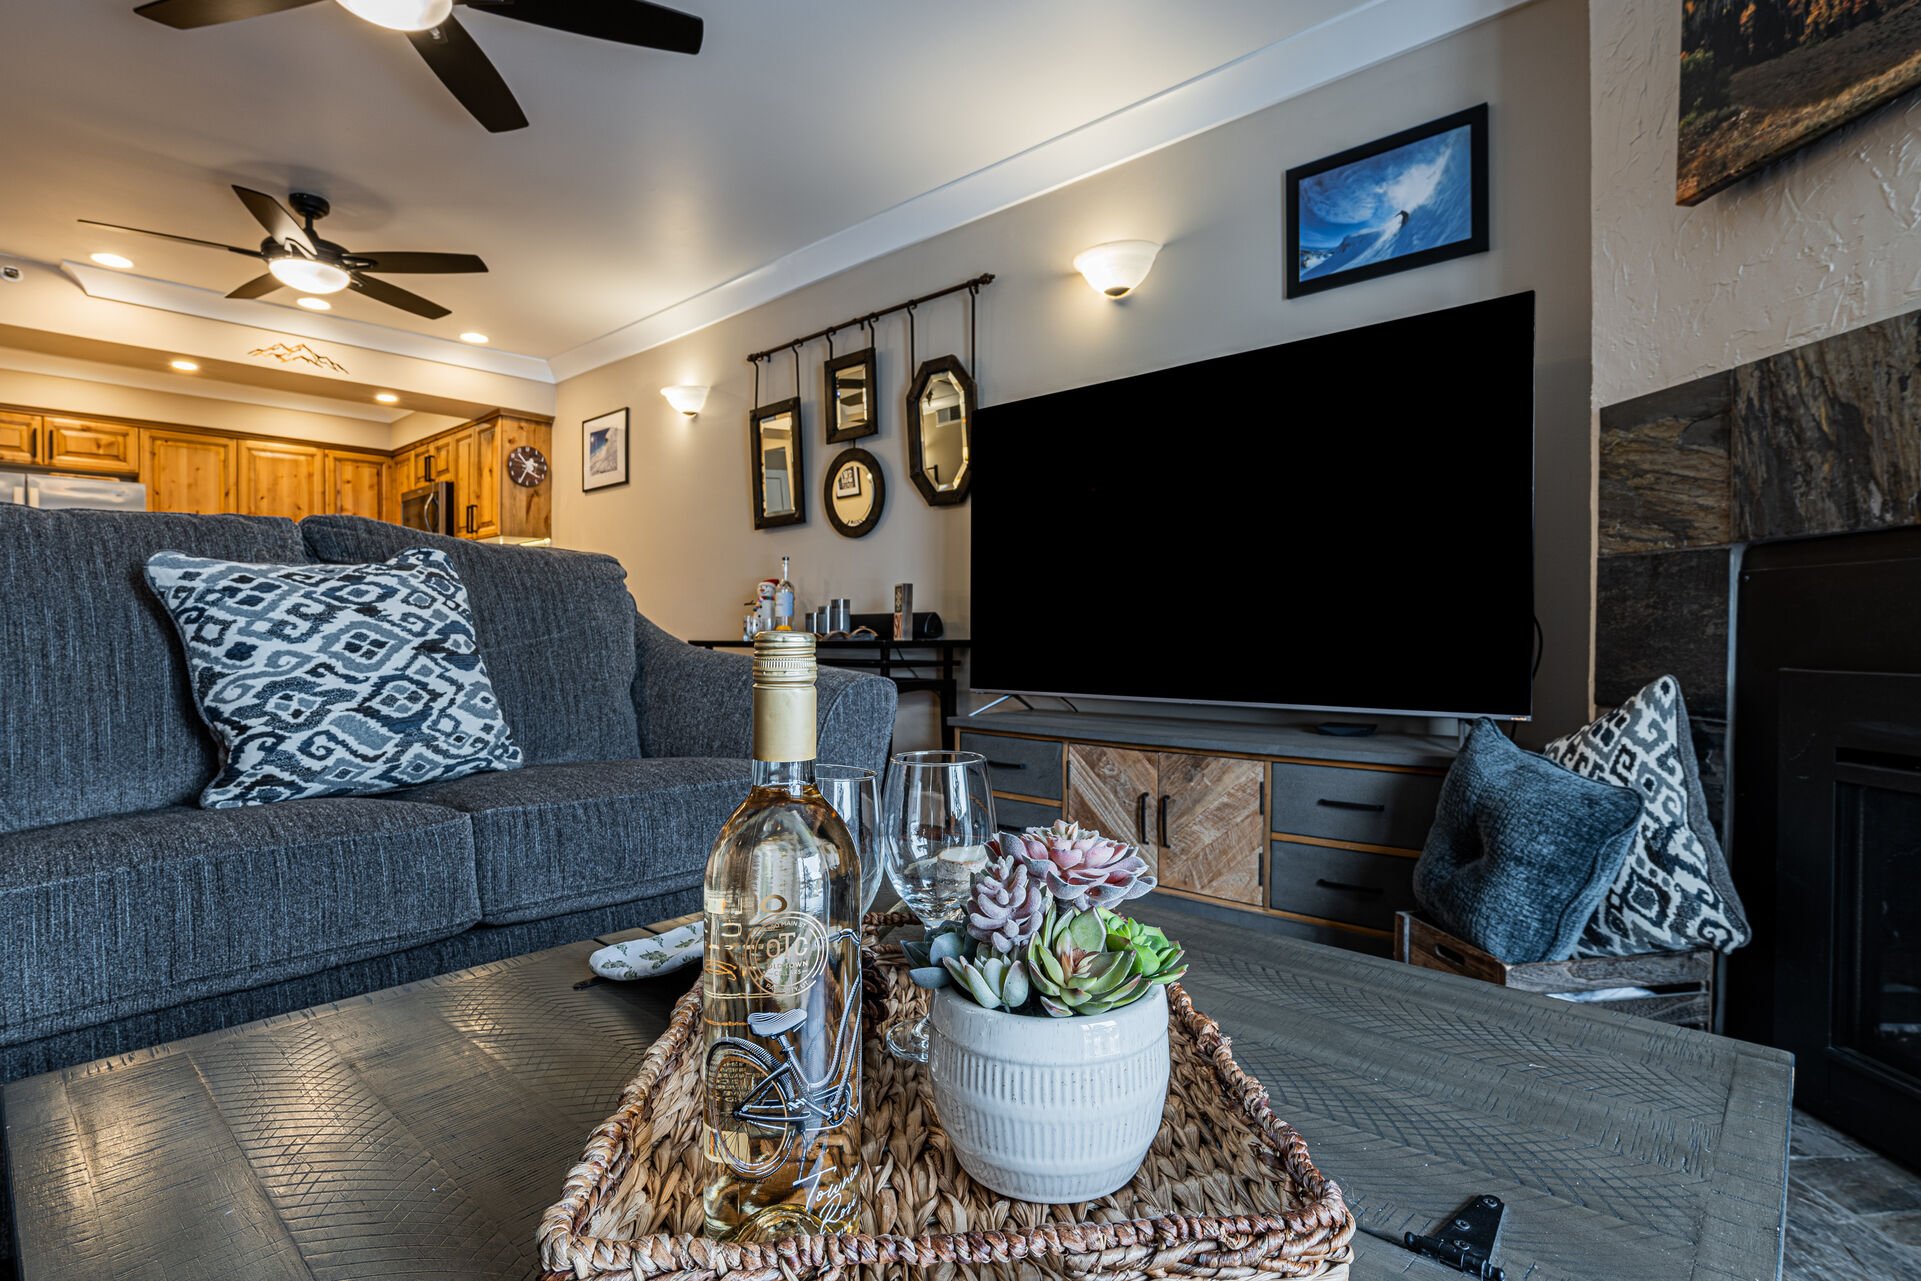 Modern furnishings including sofa sleeper, a cozy gas fireplace, and a 75” Smart TV